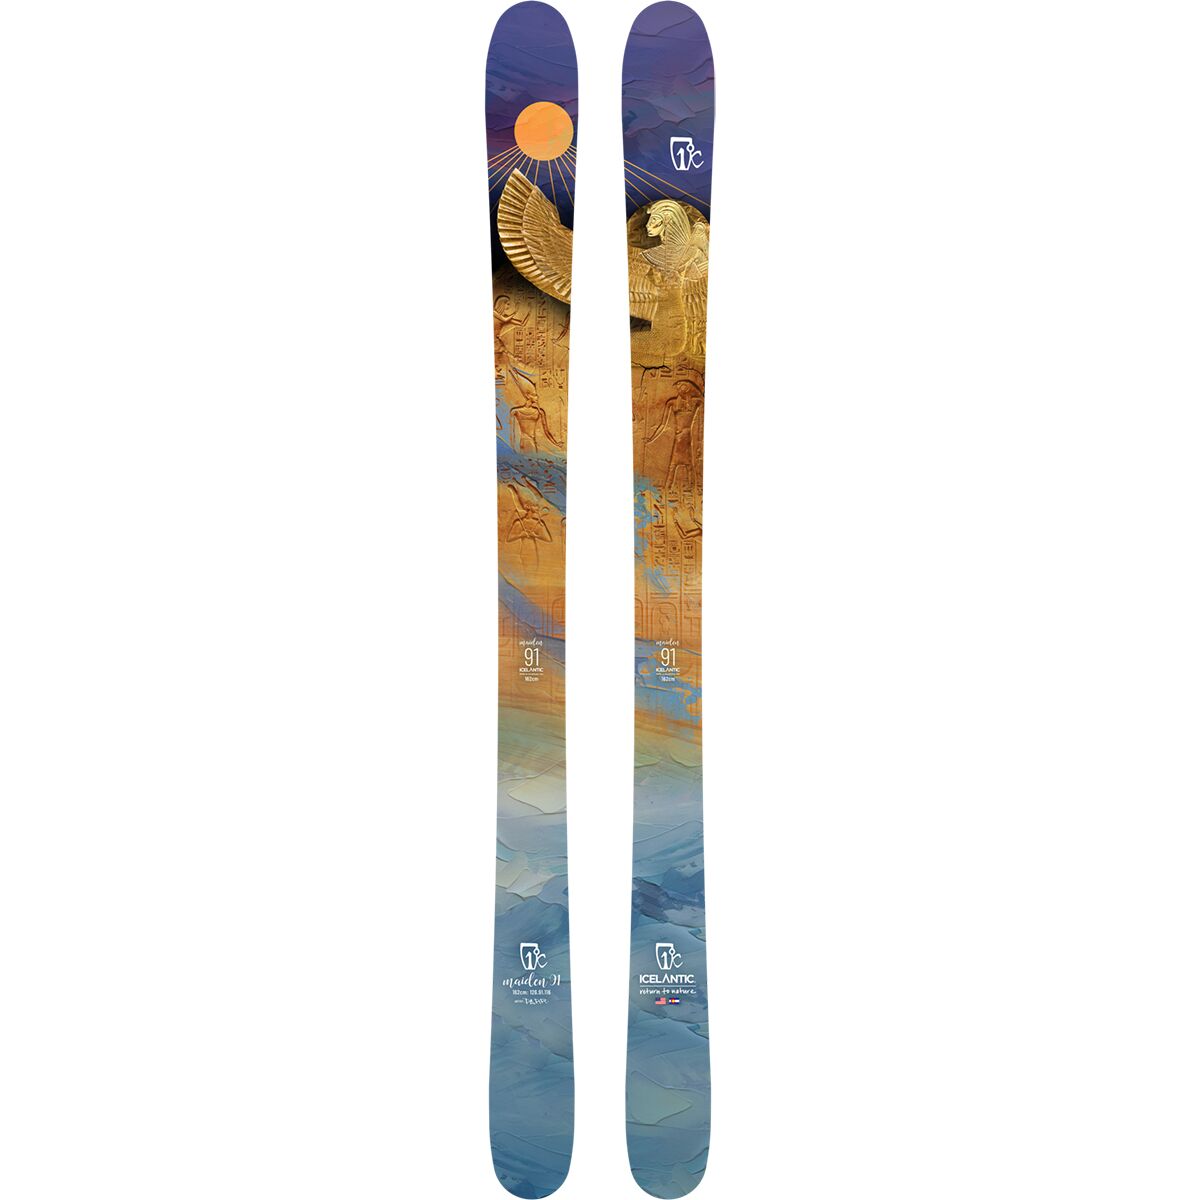 Icelantic Maiden 91 Ski - 2022 - Women's